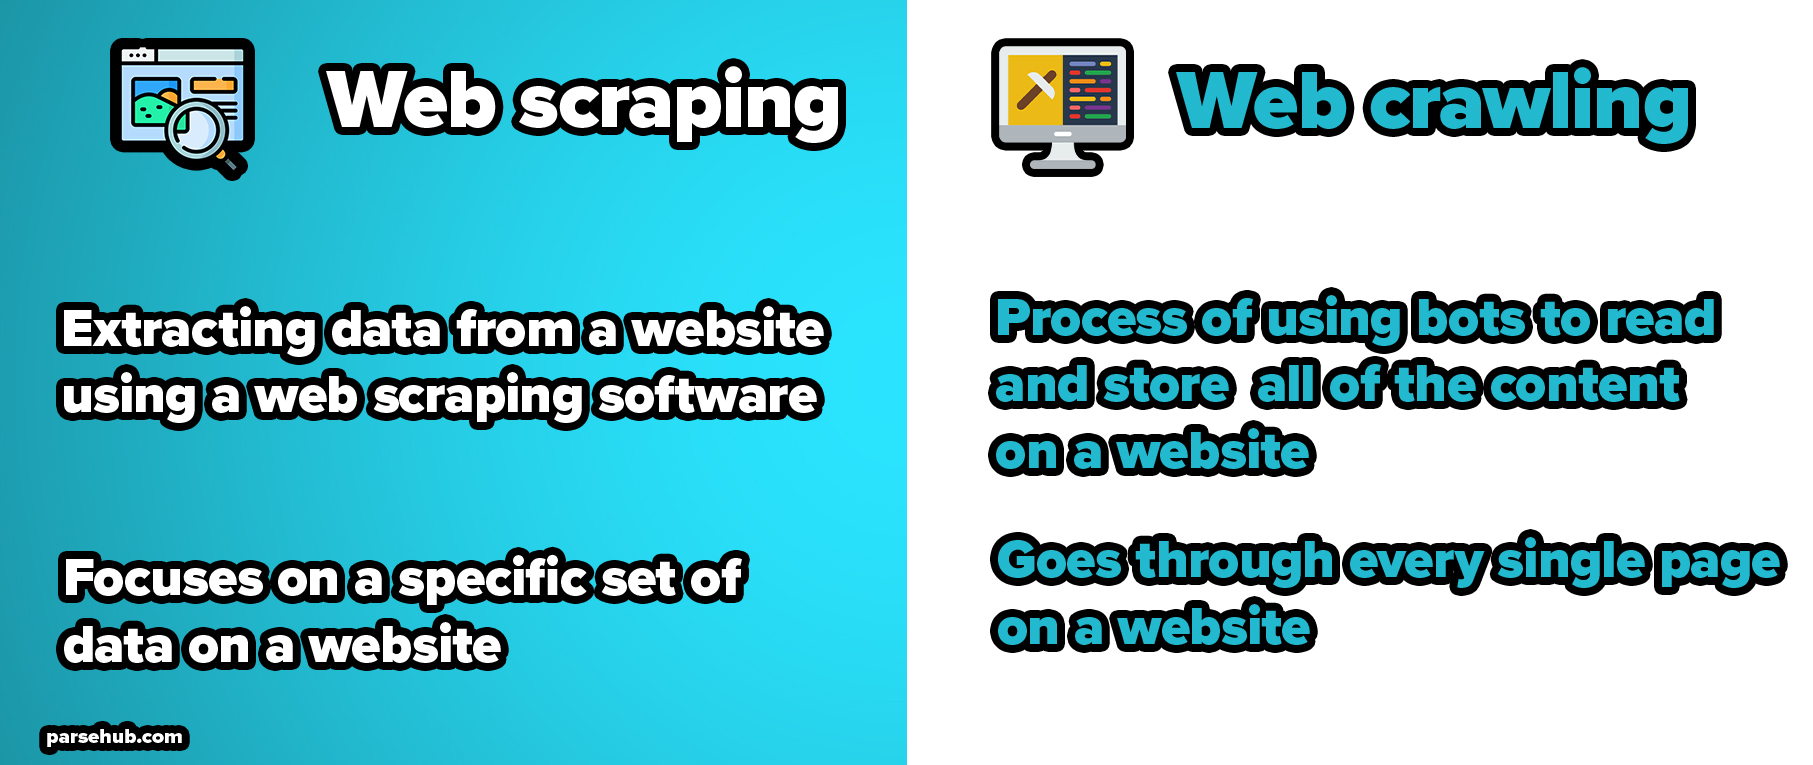 Web Scraping vs web crawling